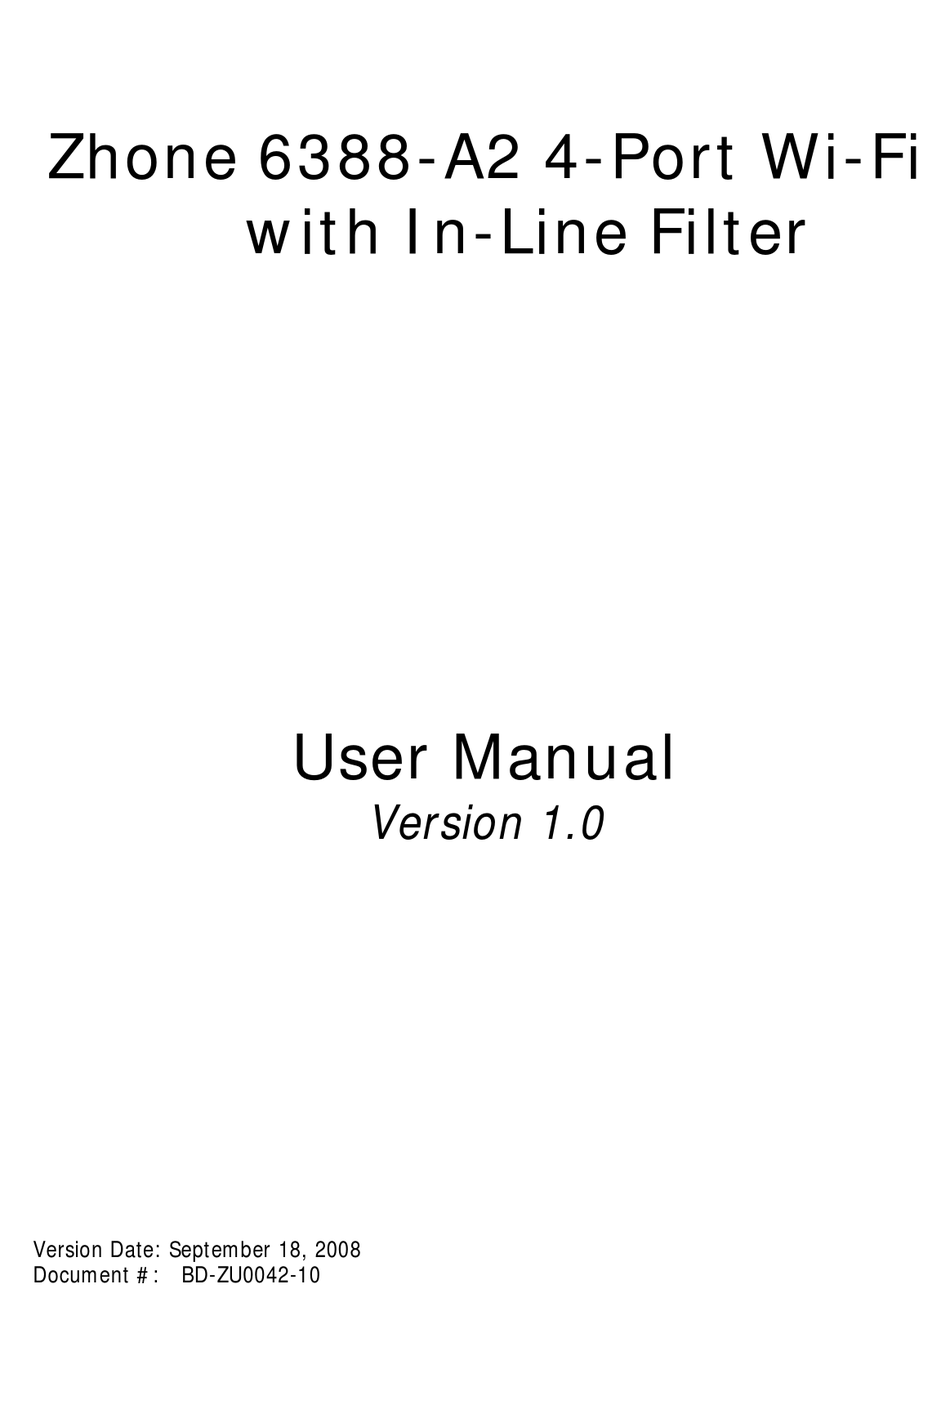 zhone-6388-a2-user-manual-pdf-download-manualslib